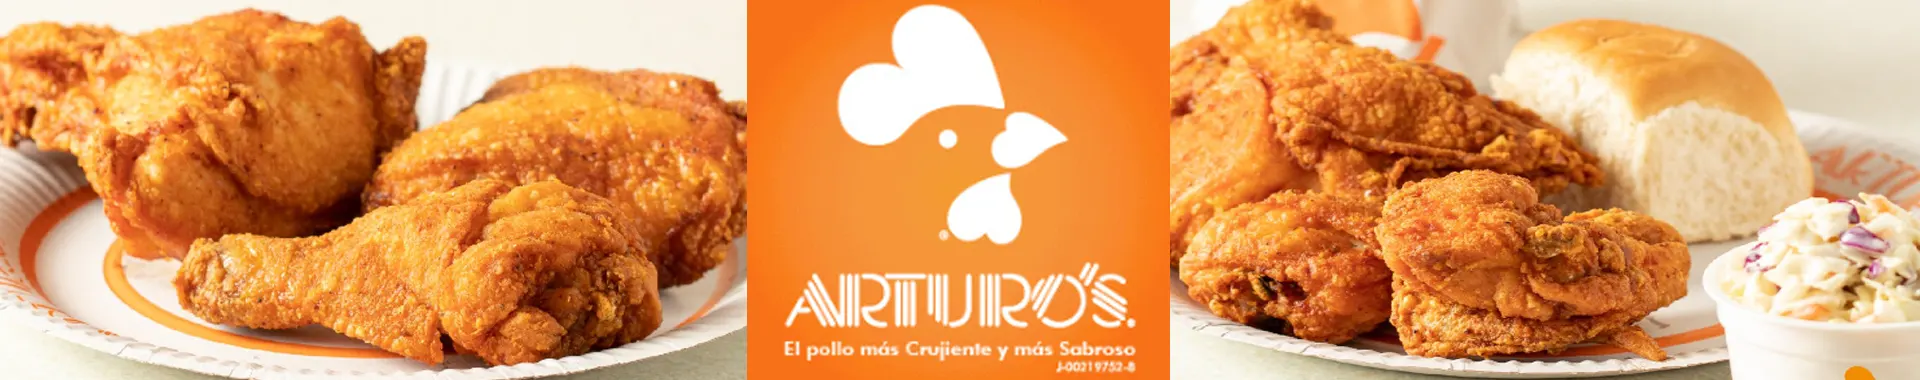 Imagen 1 del perfil de Arturo's